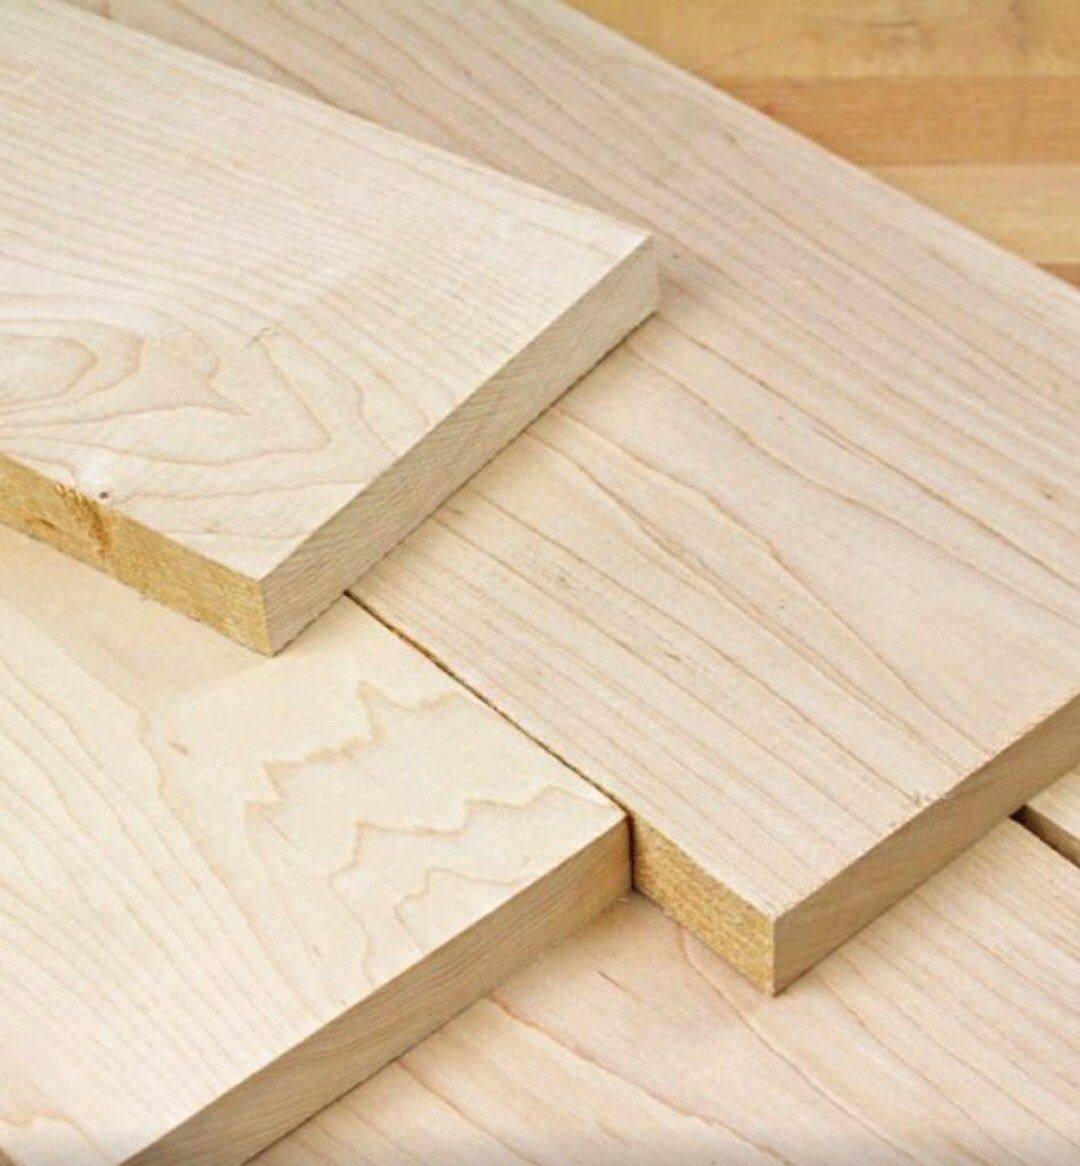 How to purchase hardwood lumber?